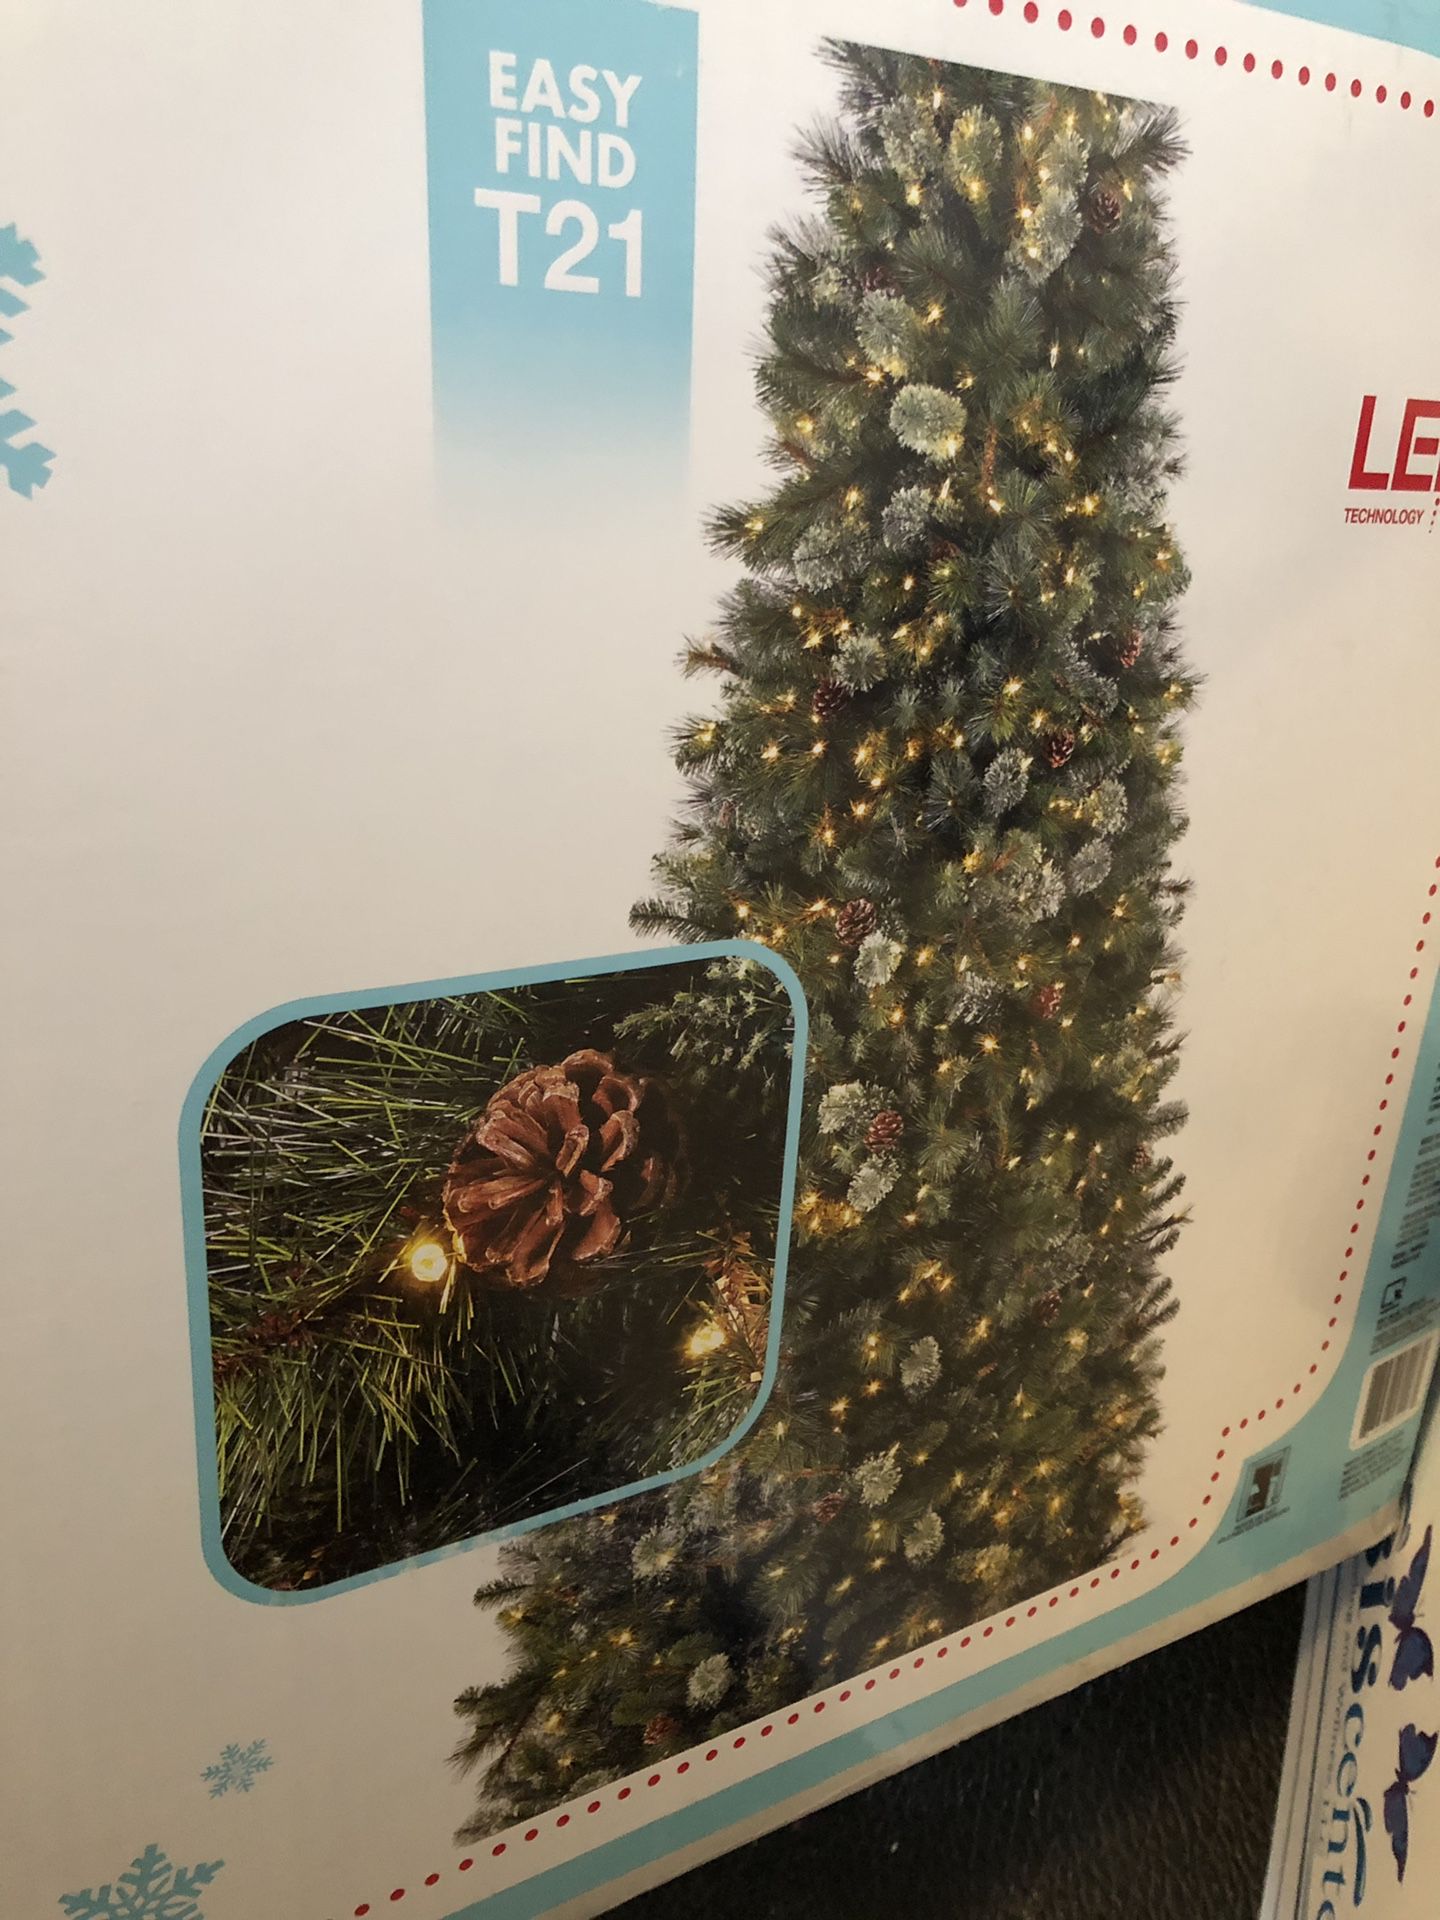 9ft Martha Stewart Christmas tree $75.00